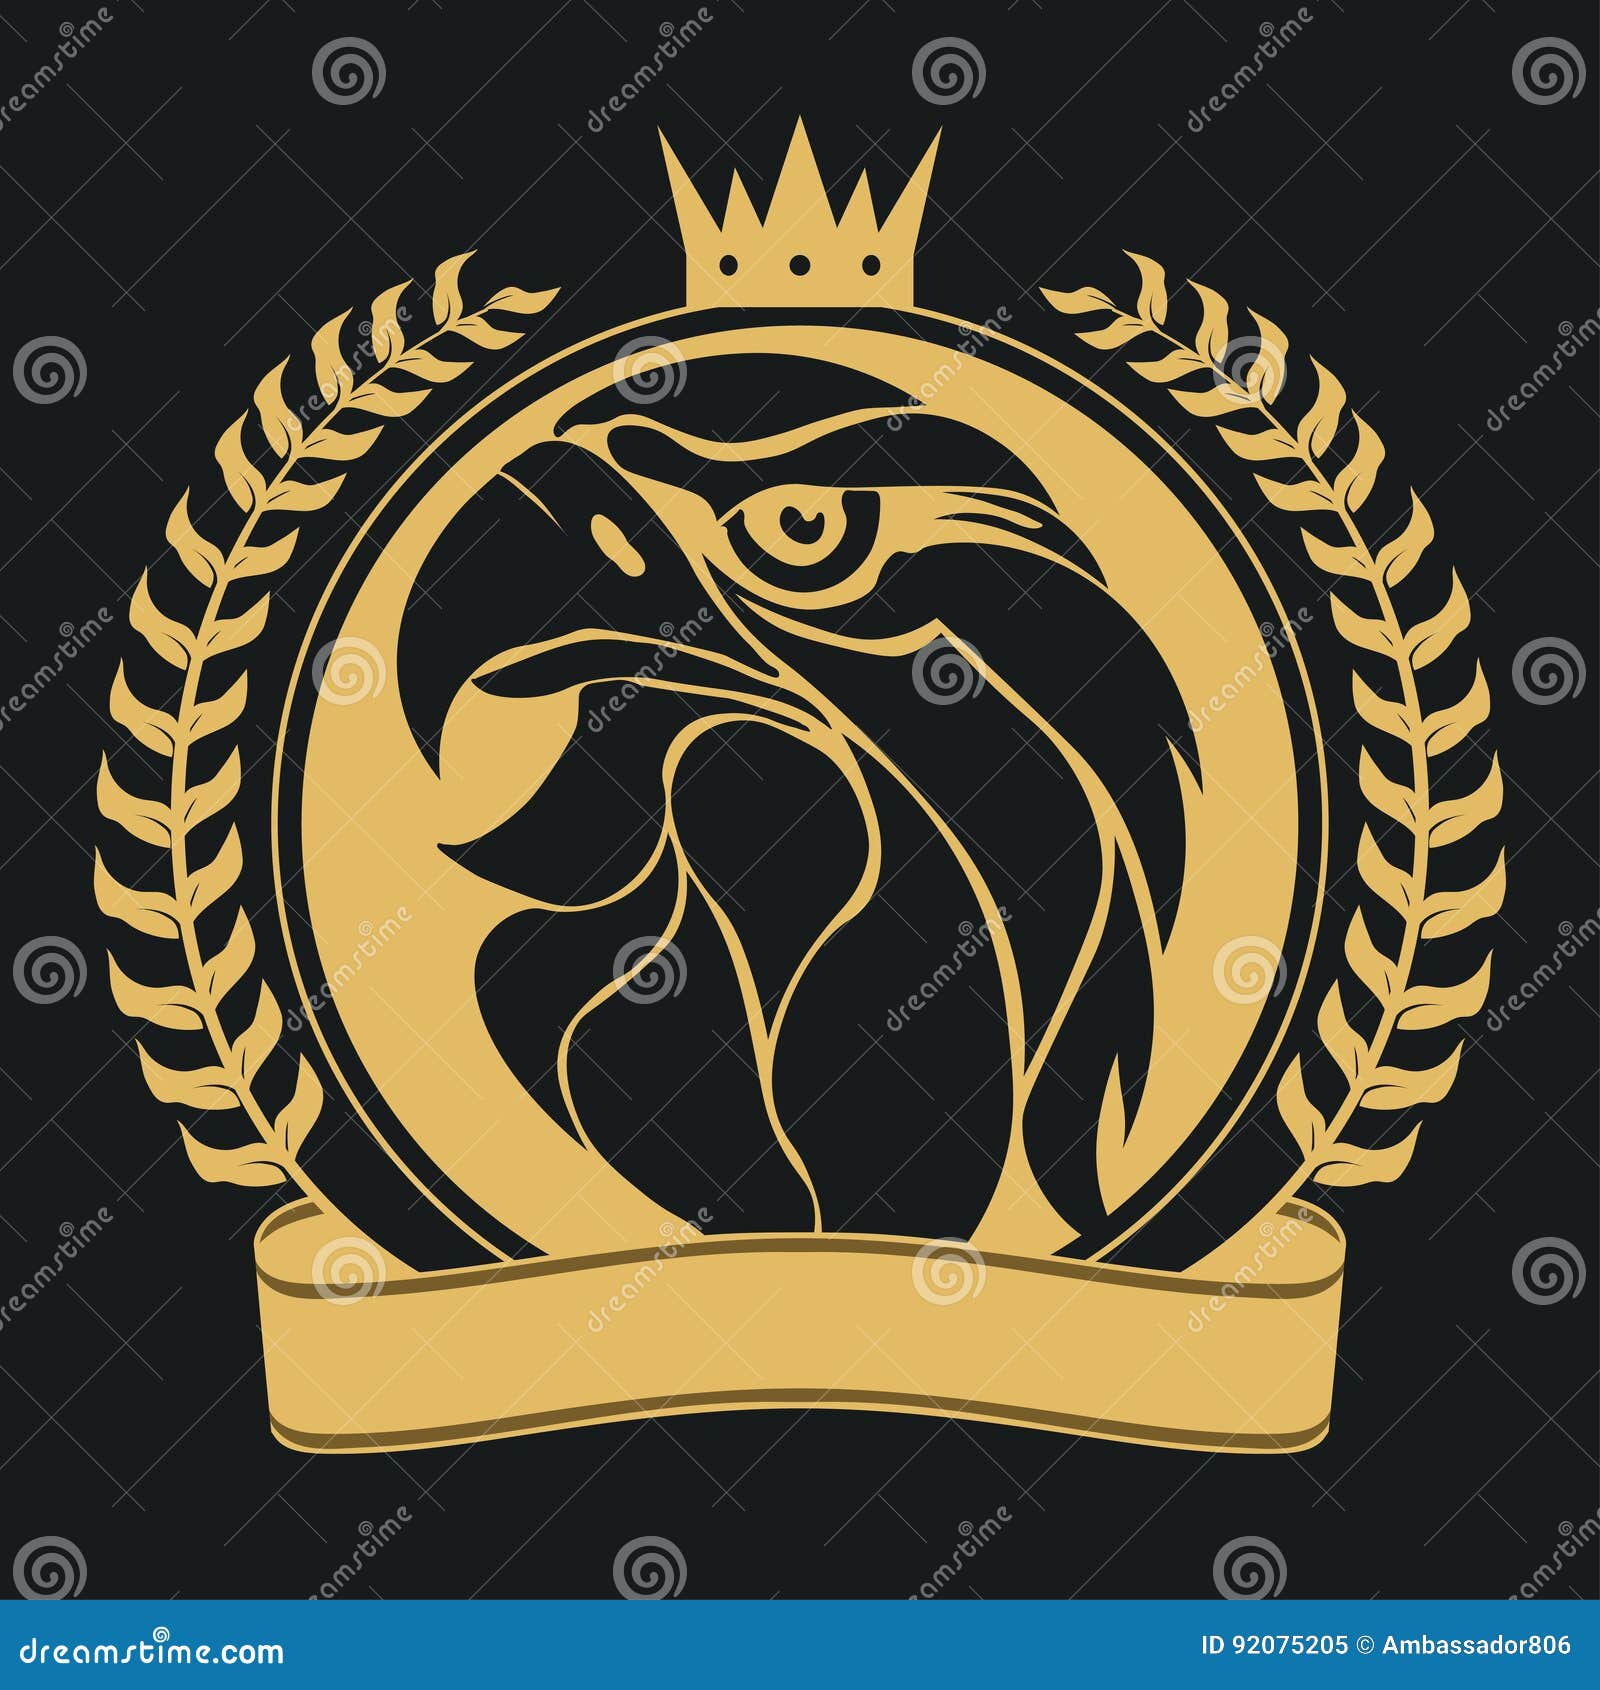 Creative Golden Eagle Shield Crown Design Symbol Vector Illustration Stock  Illustration - Download Image Now - iStock